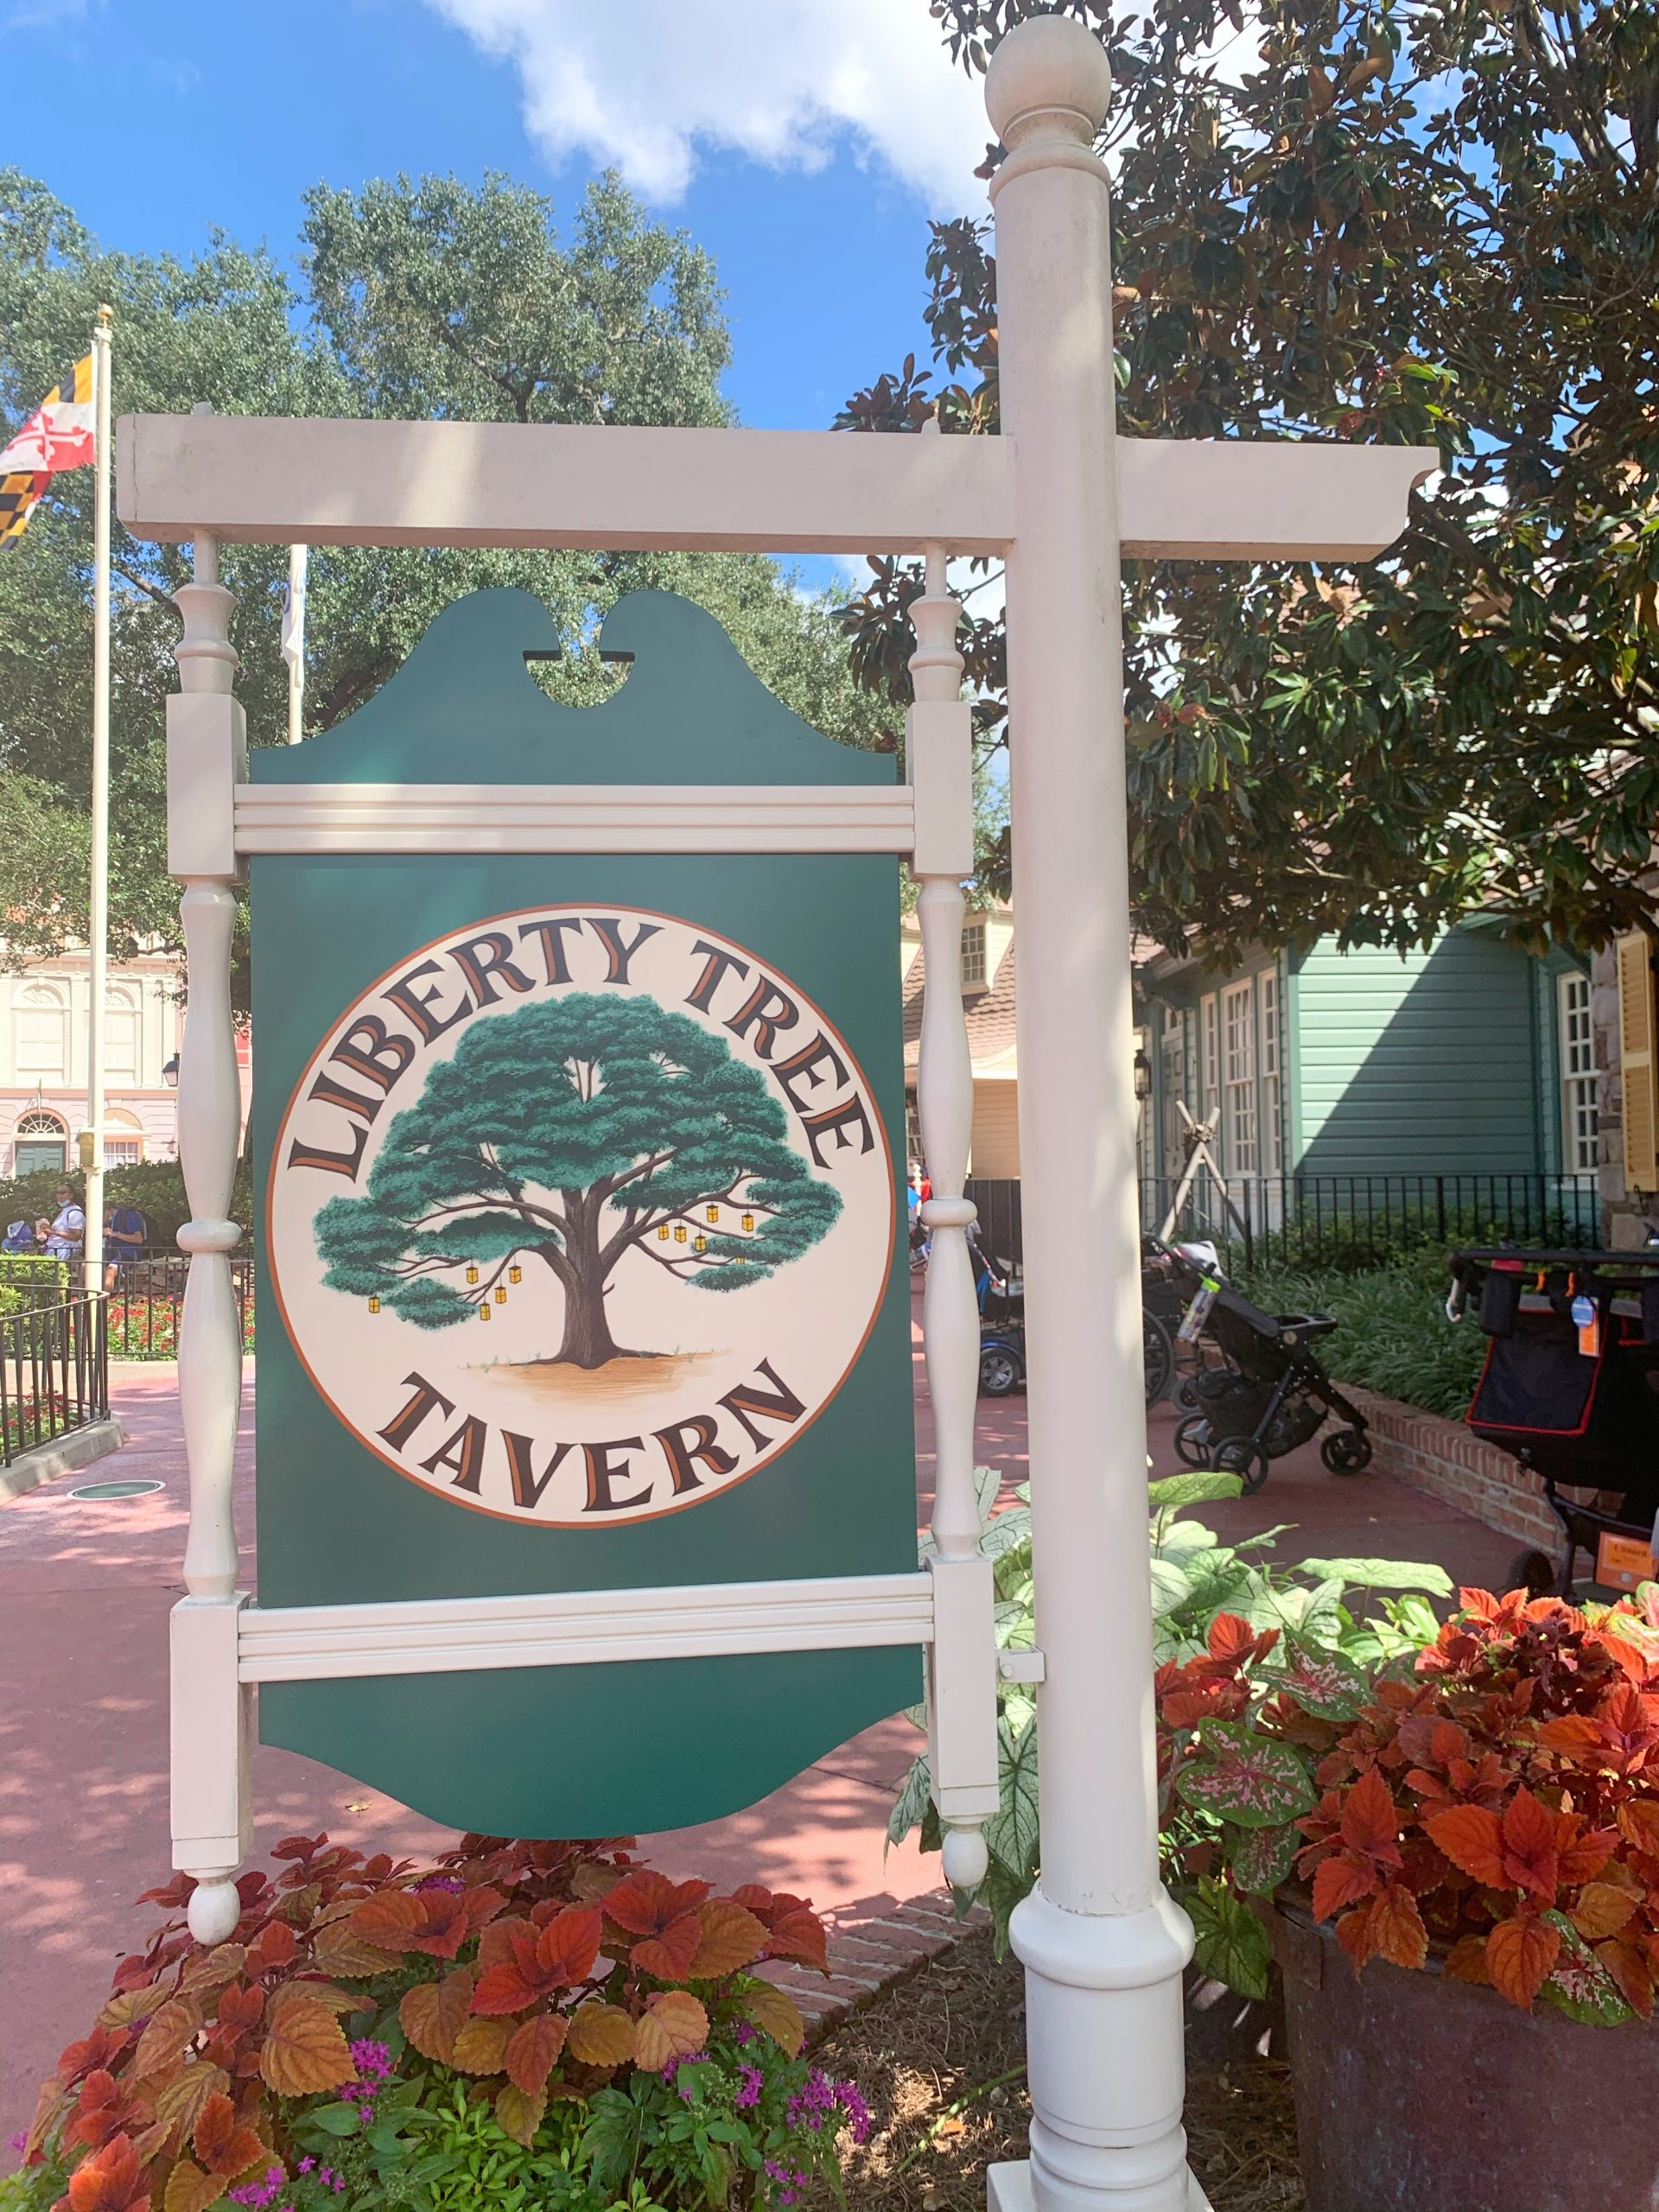 Liberty Tree Tavern Disney World Dining Review